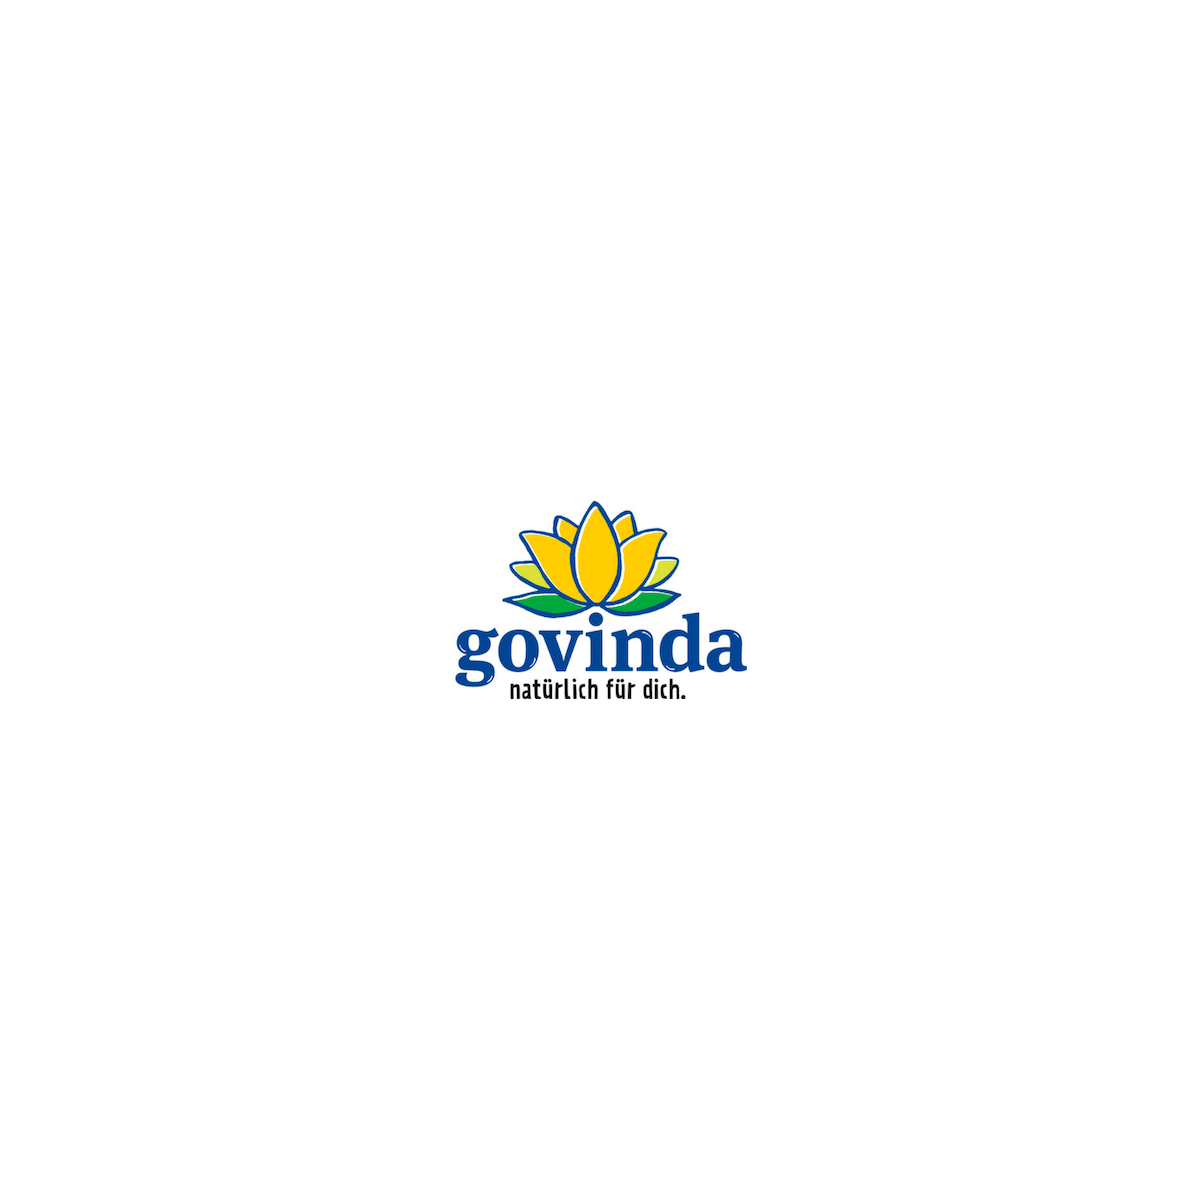  Govinda - Besondere vegane Naturprodukte...